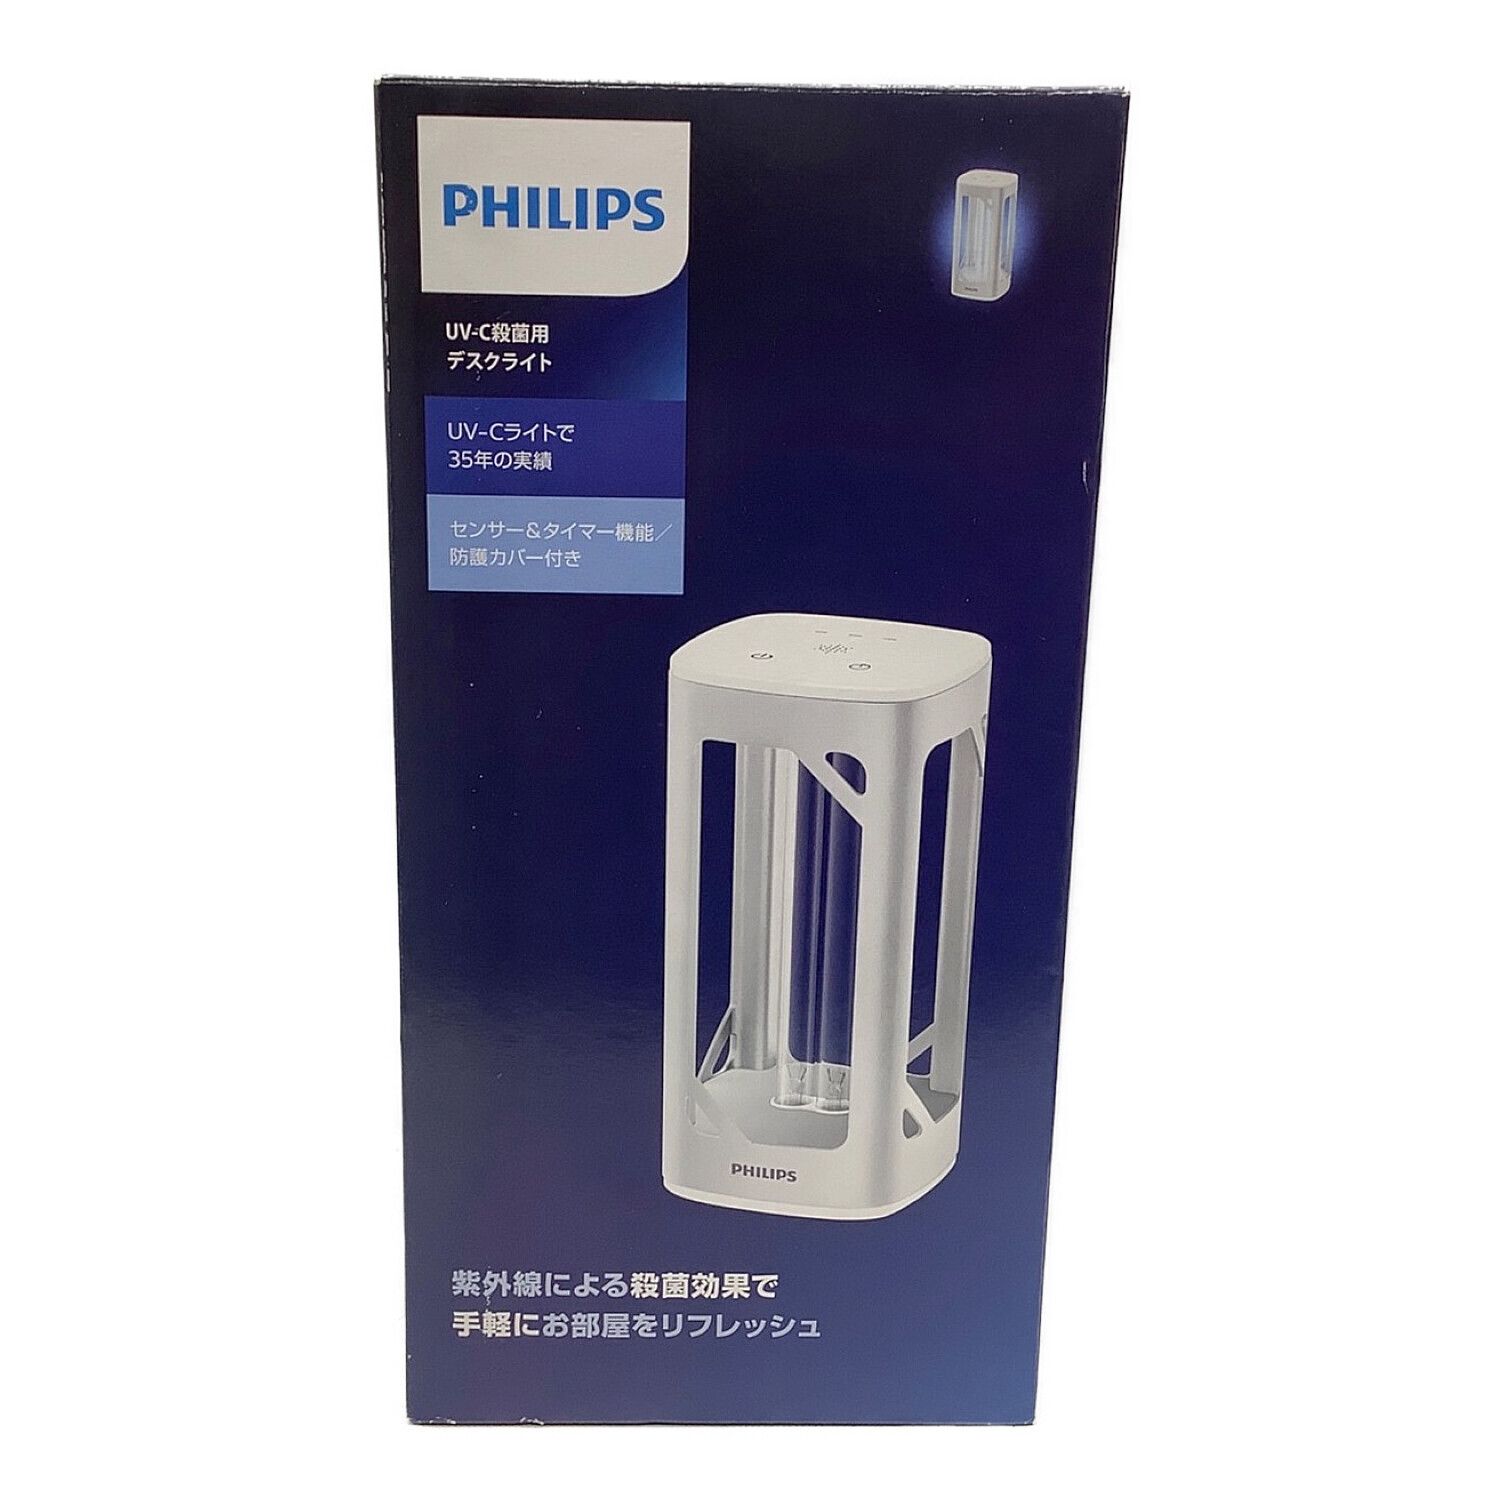 Philips (フィリップス) UV-C殺菌用デスクライト 9290024763 LED 動作確認済み｜トレファクONLINE